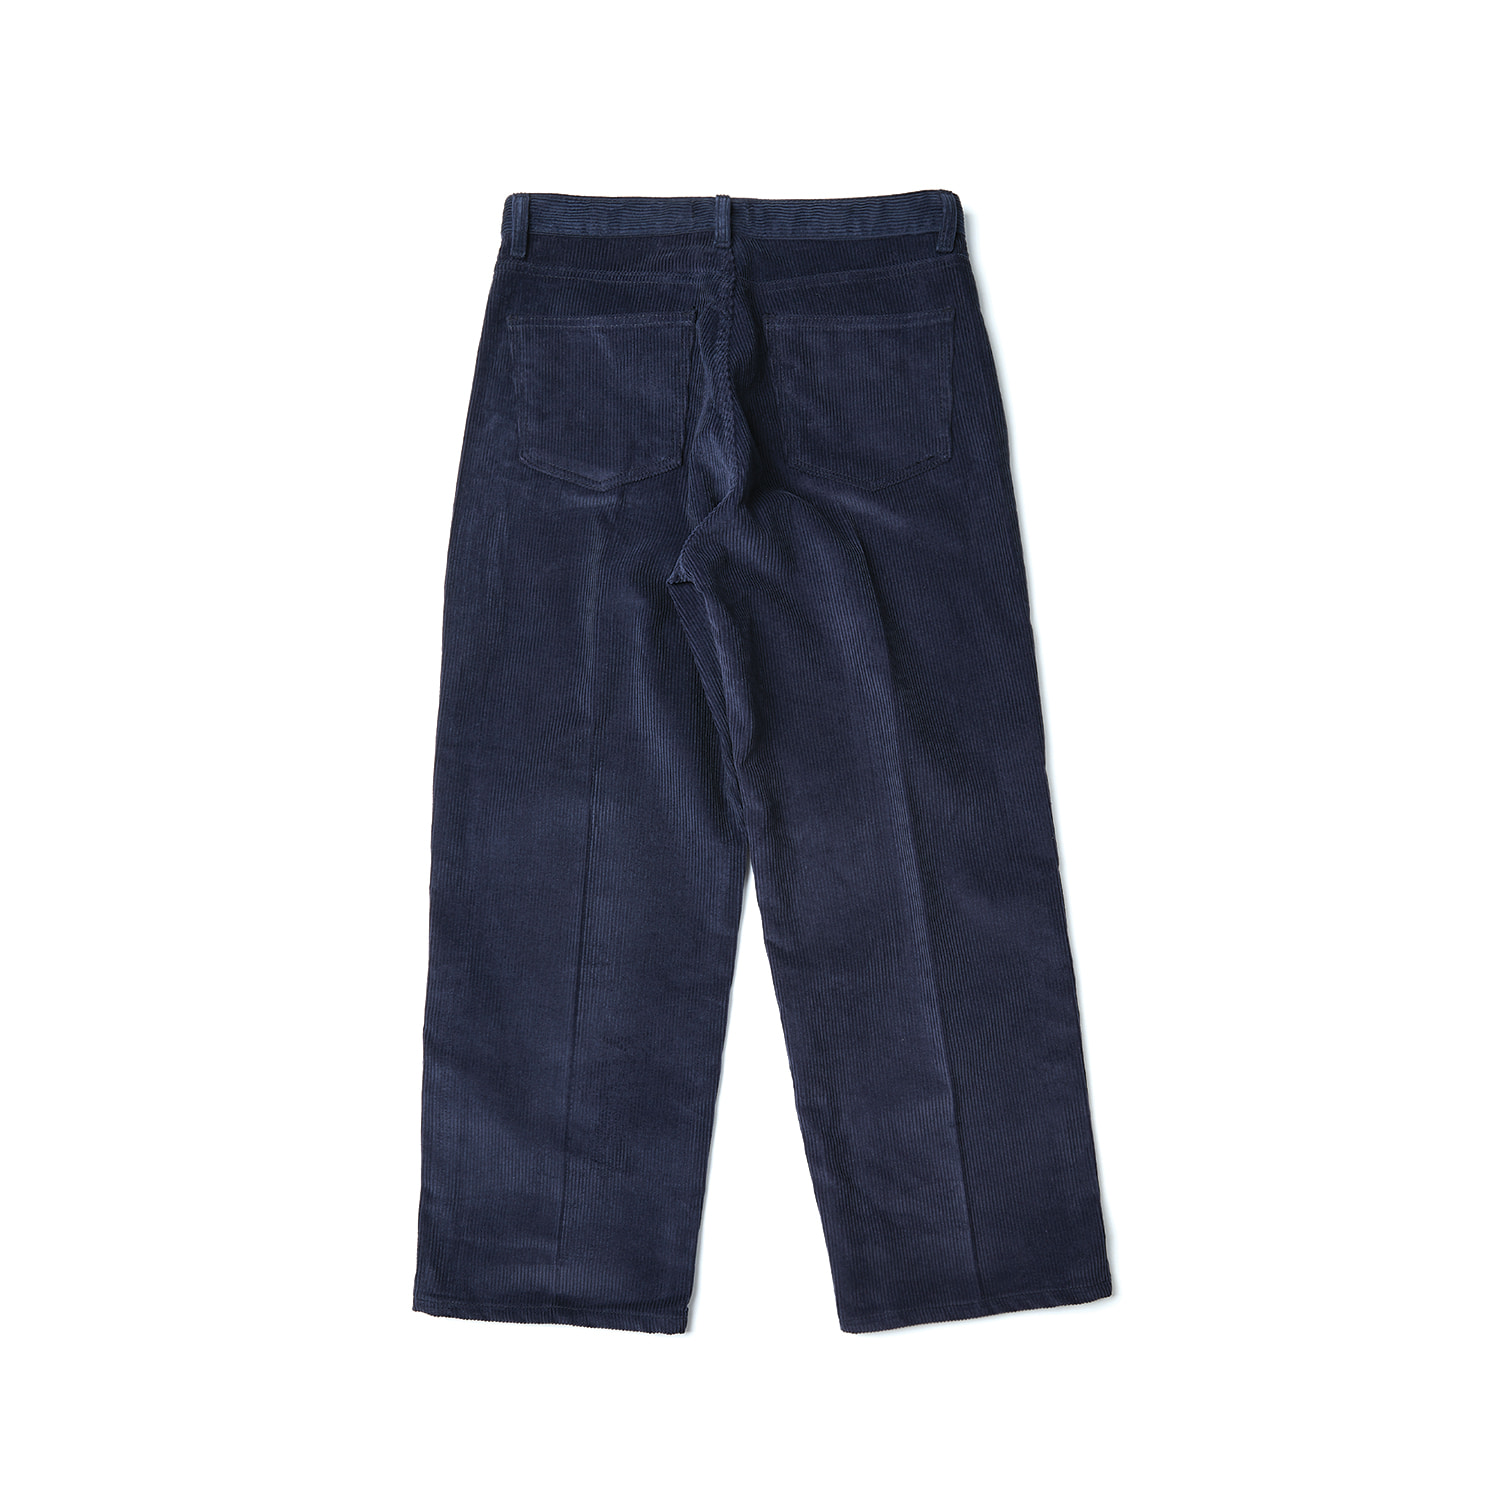 corduroy wide pants / navy